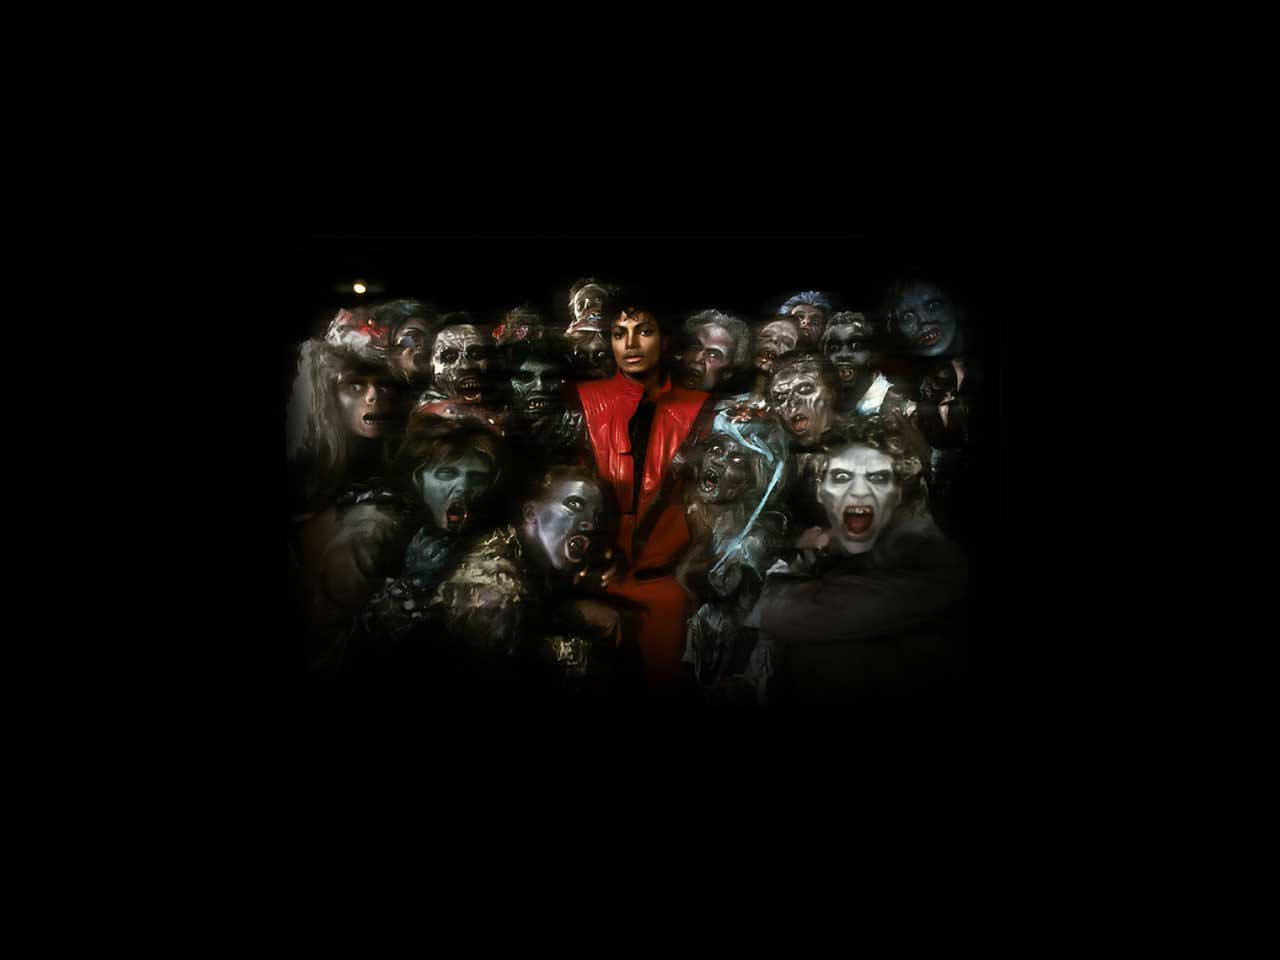 Michael Jackson Thriller Poster